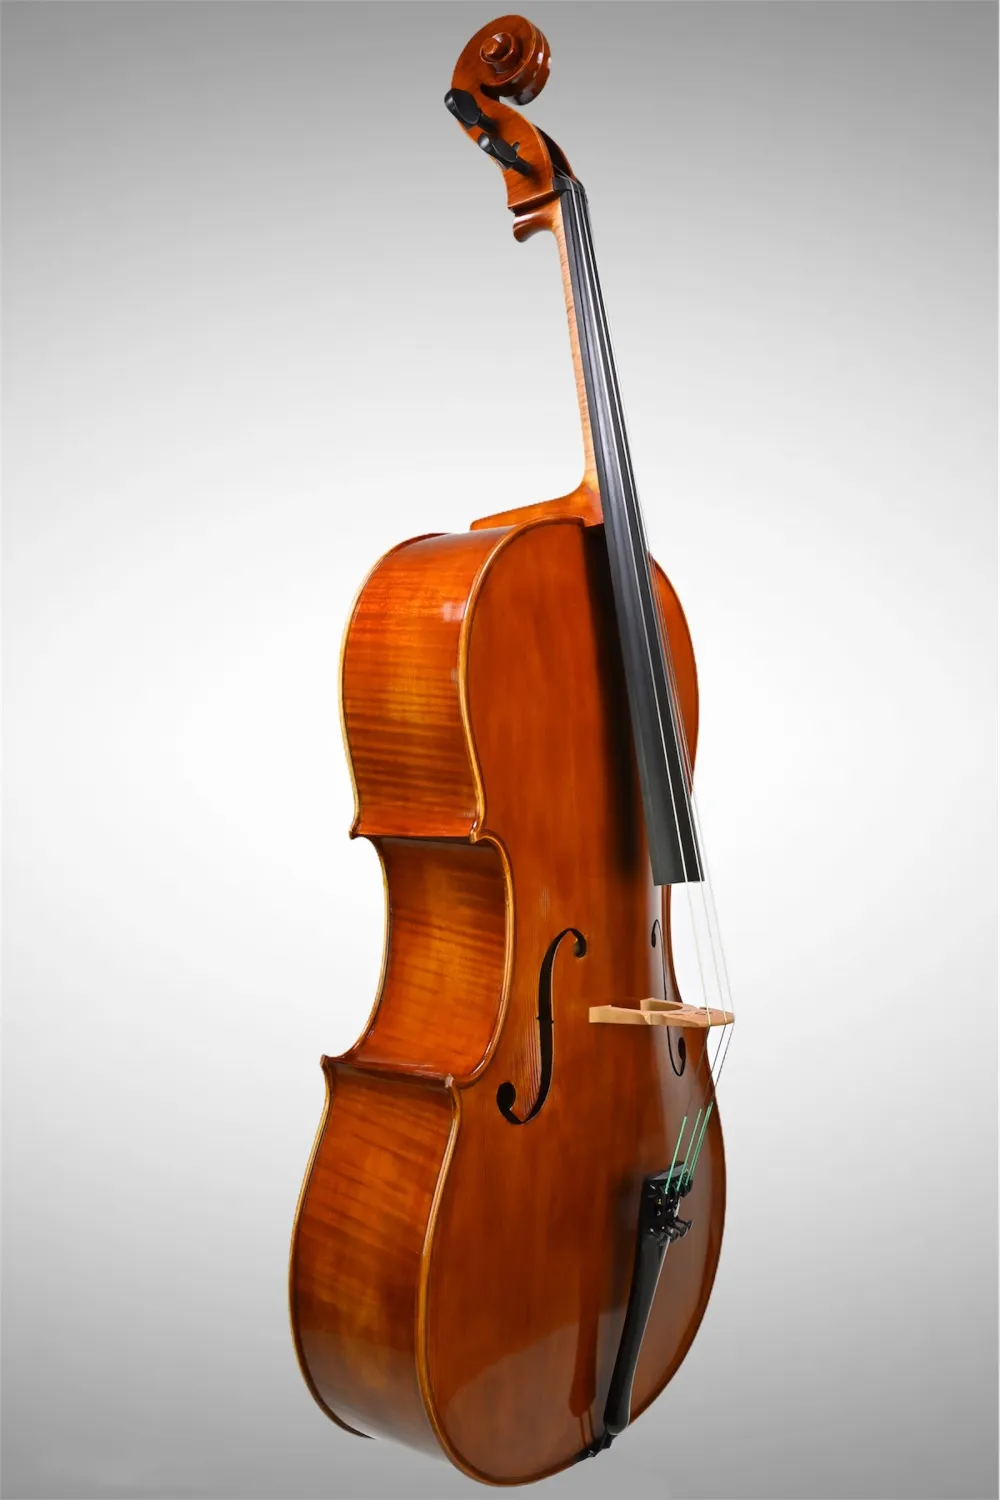 Stoica Alin 4/4 Strad. "di Bottega" Cello, Handarbeit aus RO